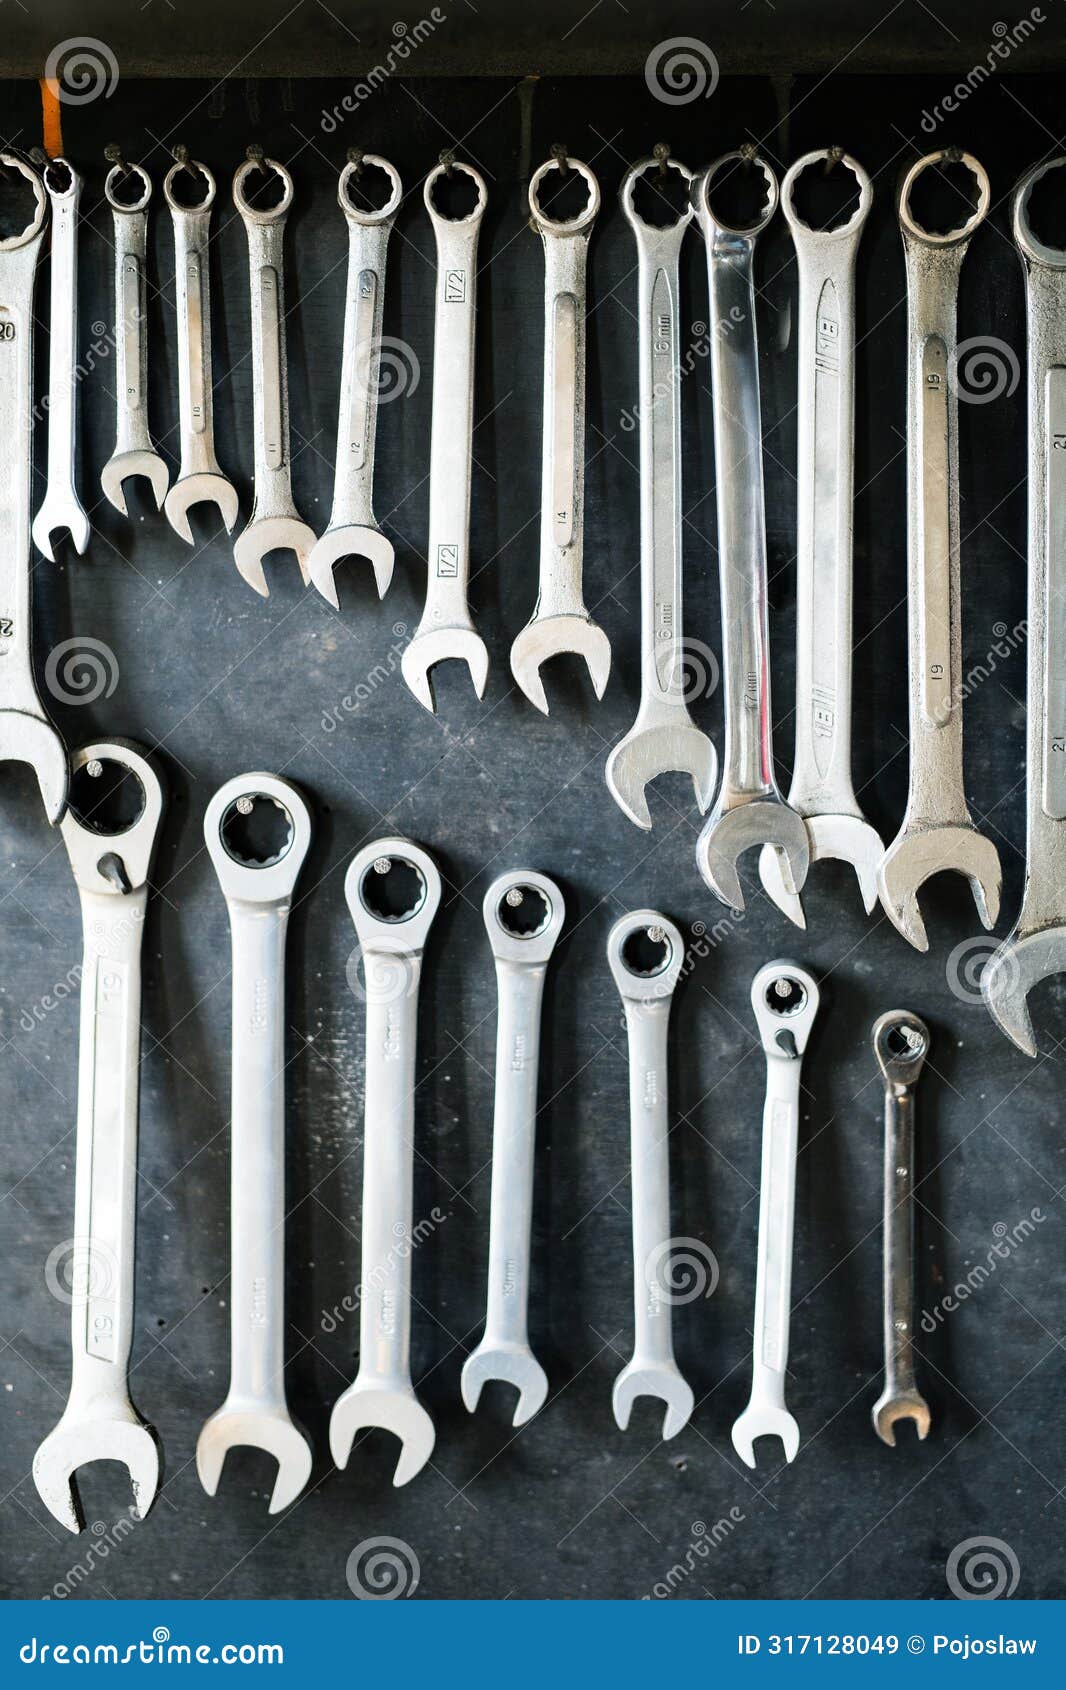 combination wrenches set in auto repair shop. mechanics repairing, maintaining car in garage.